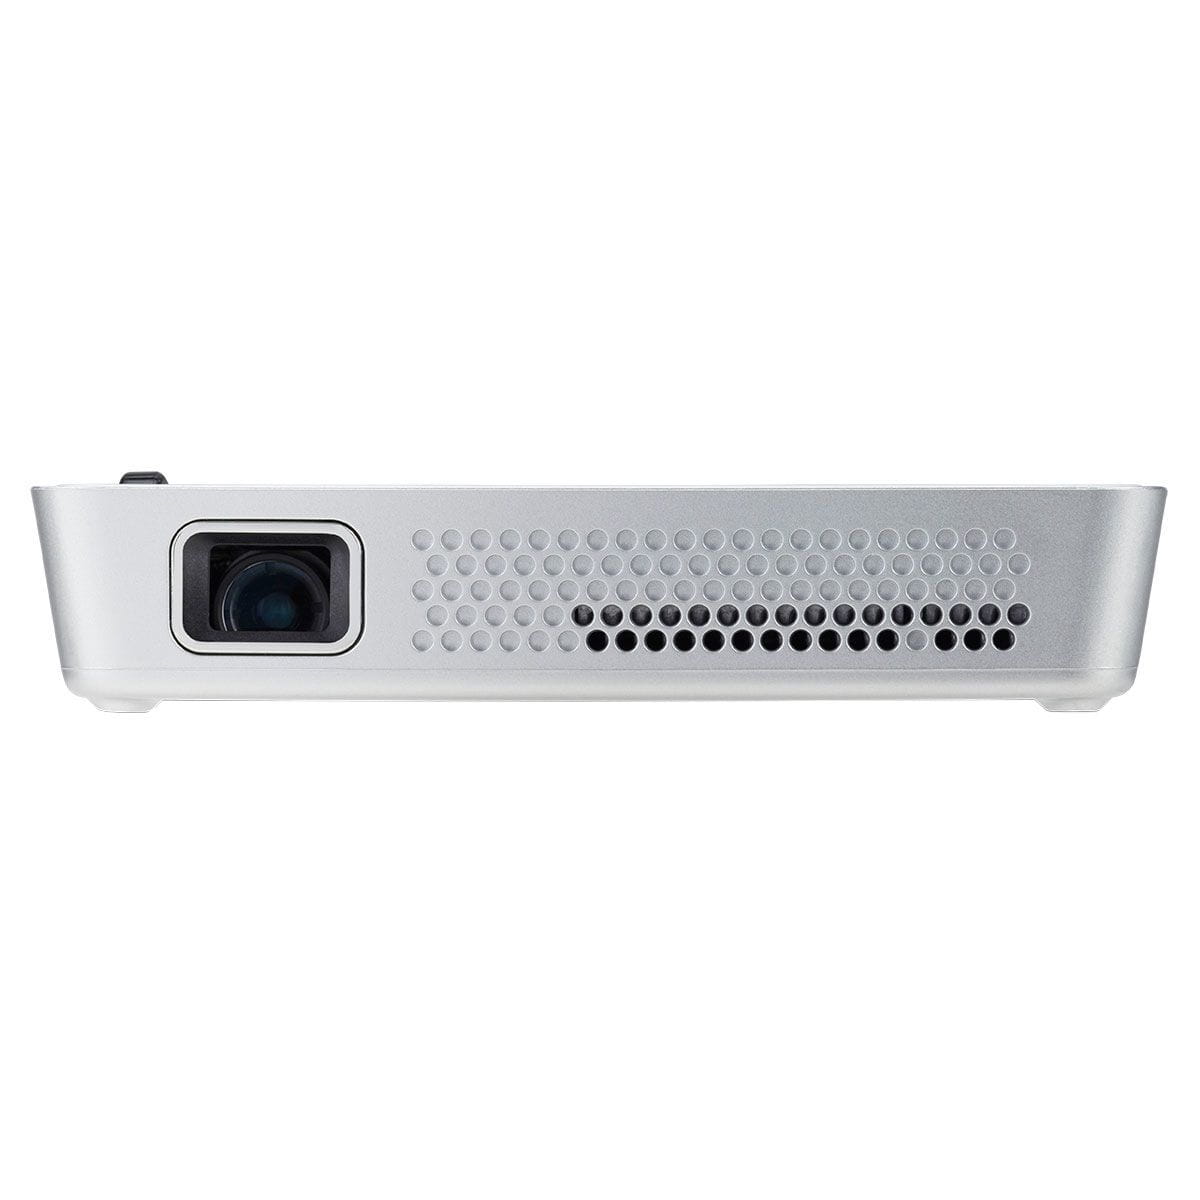 Projector Acer C101I / DLP / WVGA / LED / 150Lm / 100000:1 / Mono Speaker / 400mAh battery /